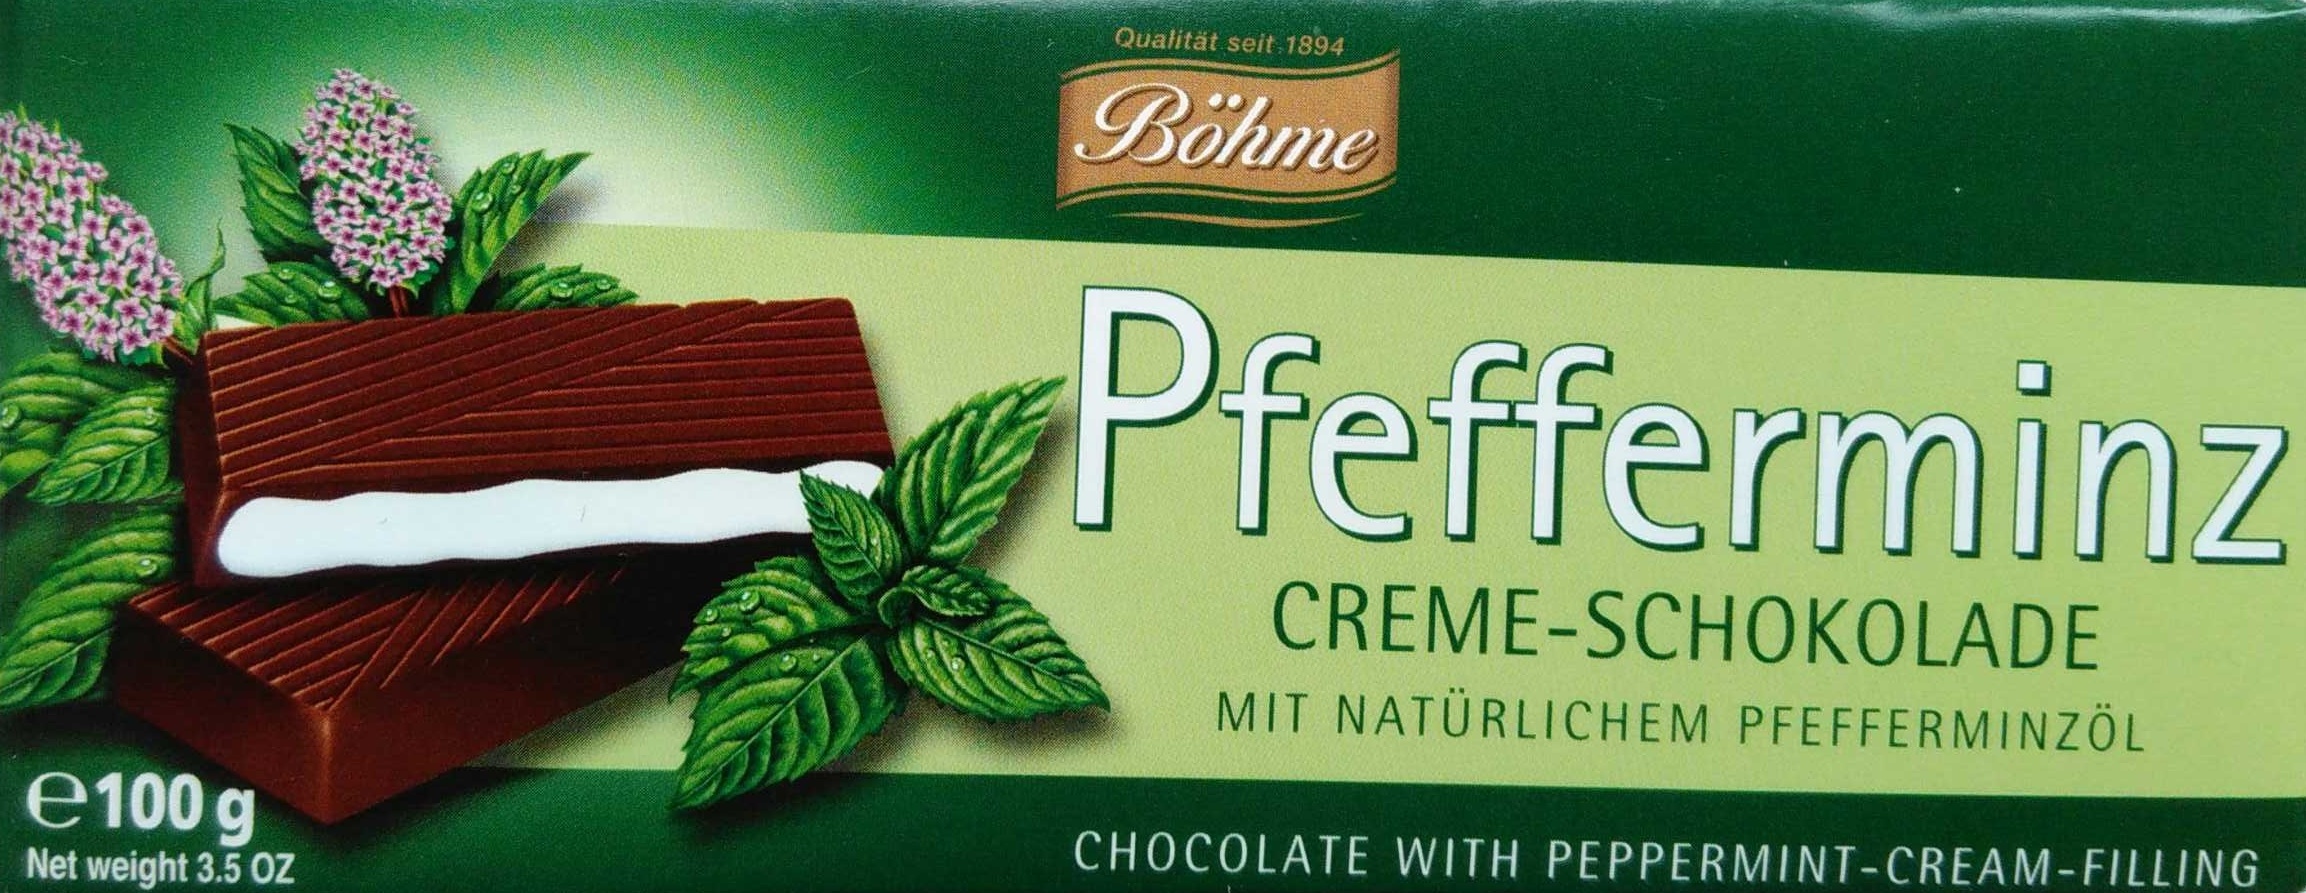 Pfefferminz-Creme-Schokolade - Product - de